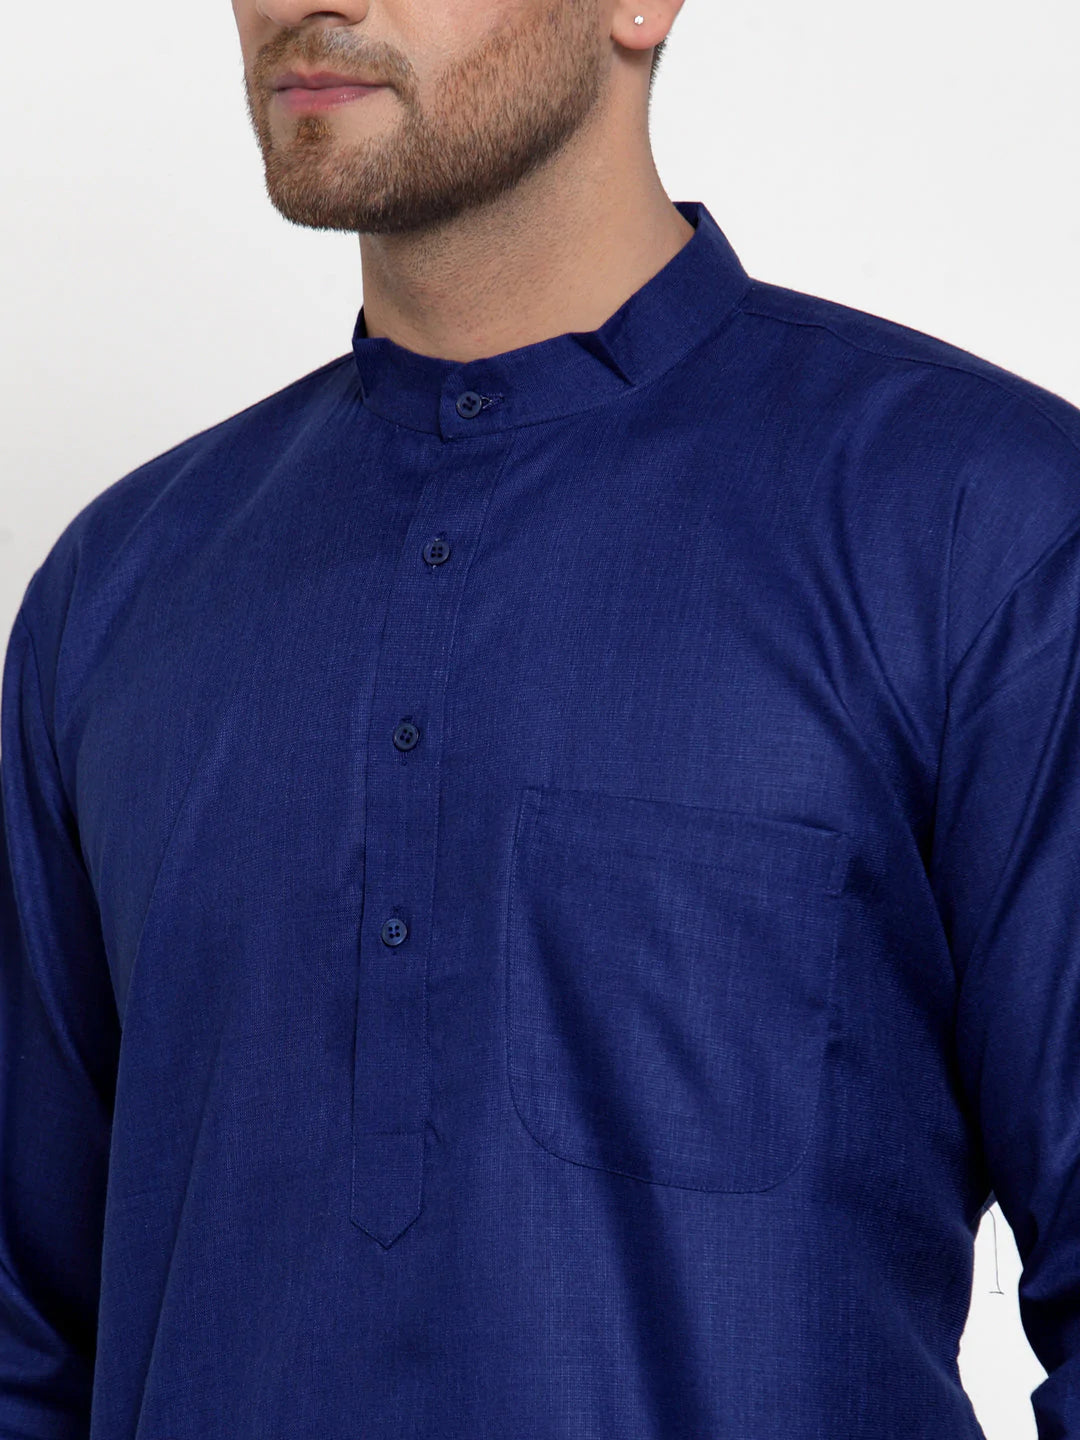 Jompers Men's Royal Blue Cotton Solid Kurta Payjama Sets ( JOKP 611 Royal )